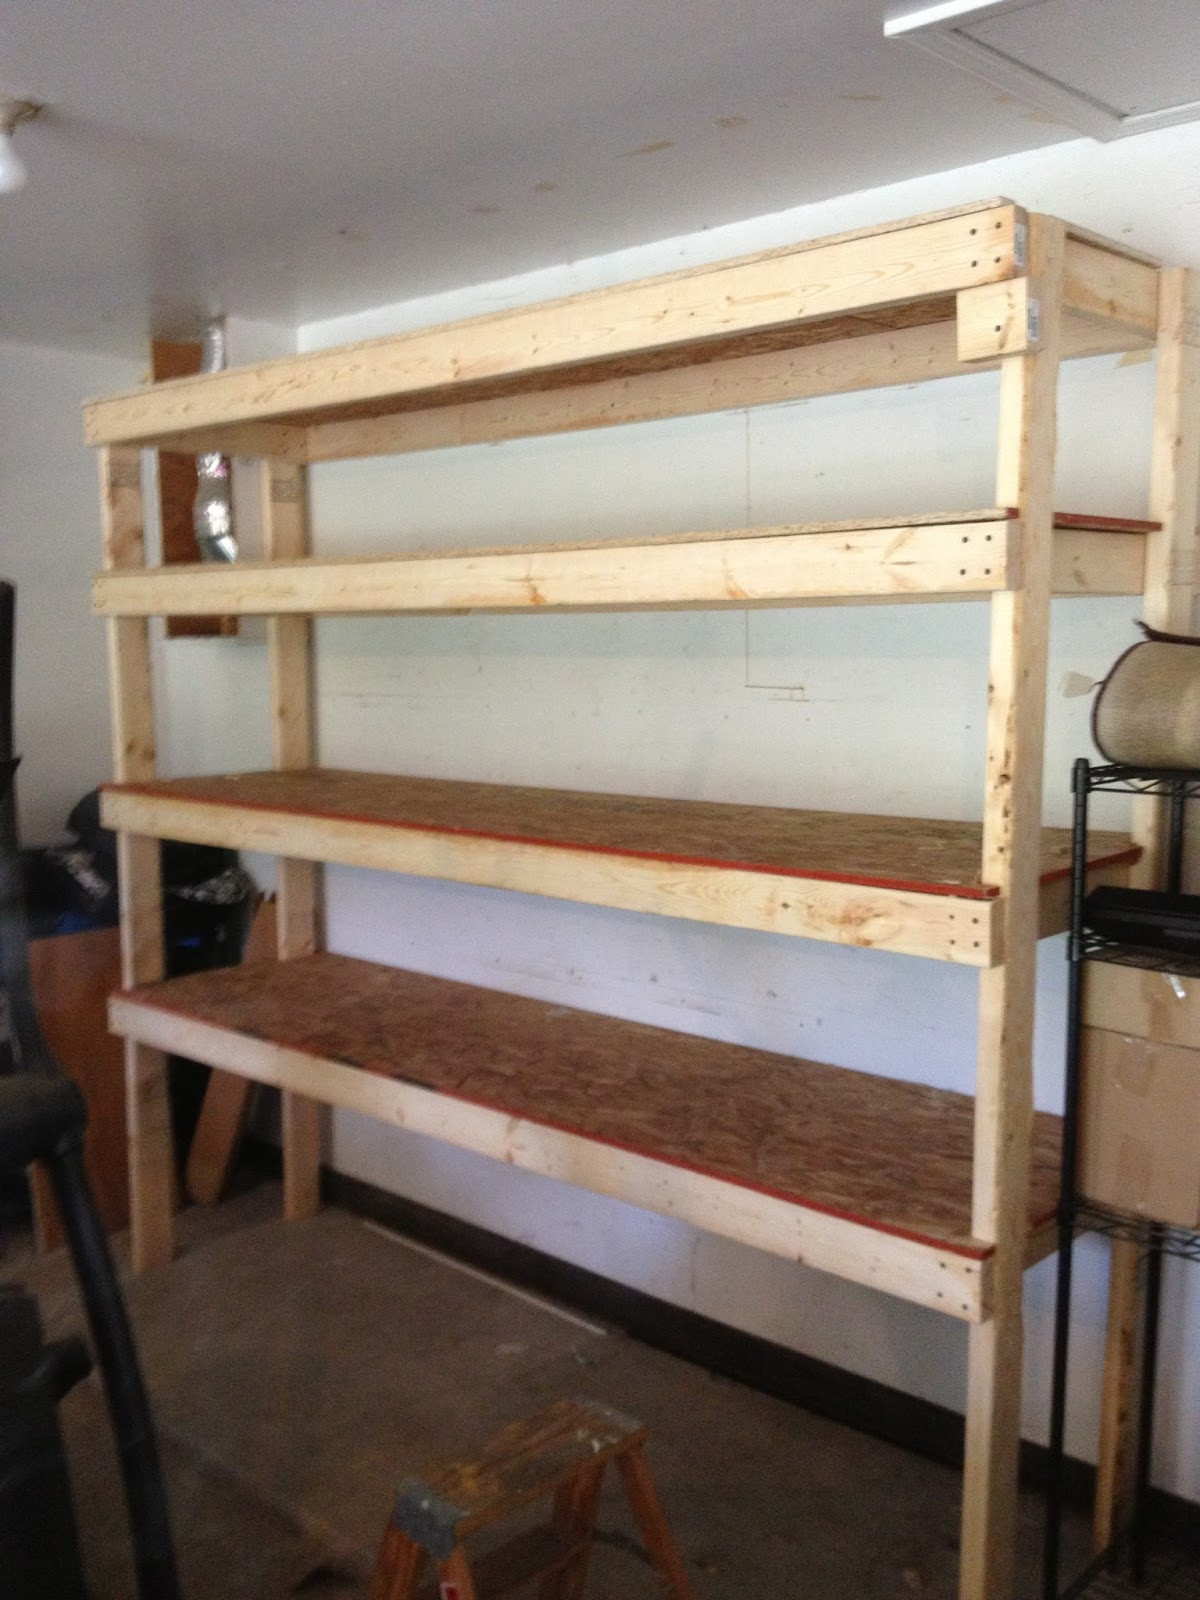 DIY Shelves Plans
 20 DIY Garage Shelving Ideas